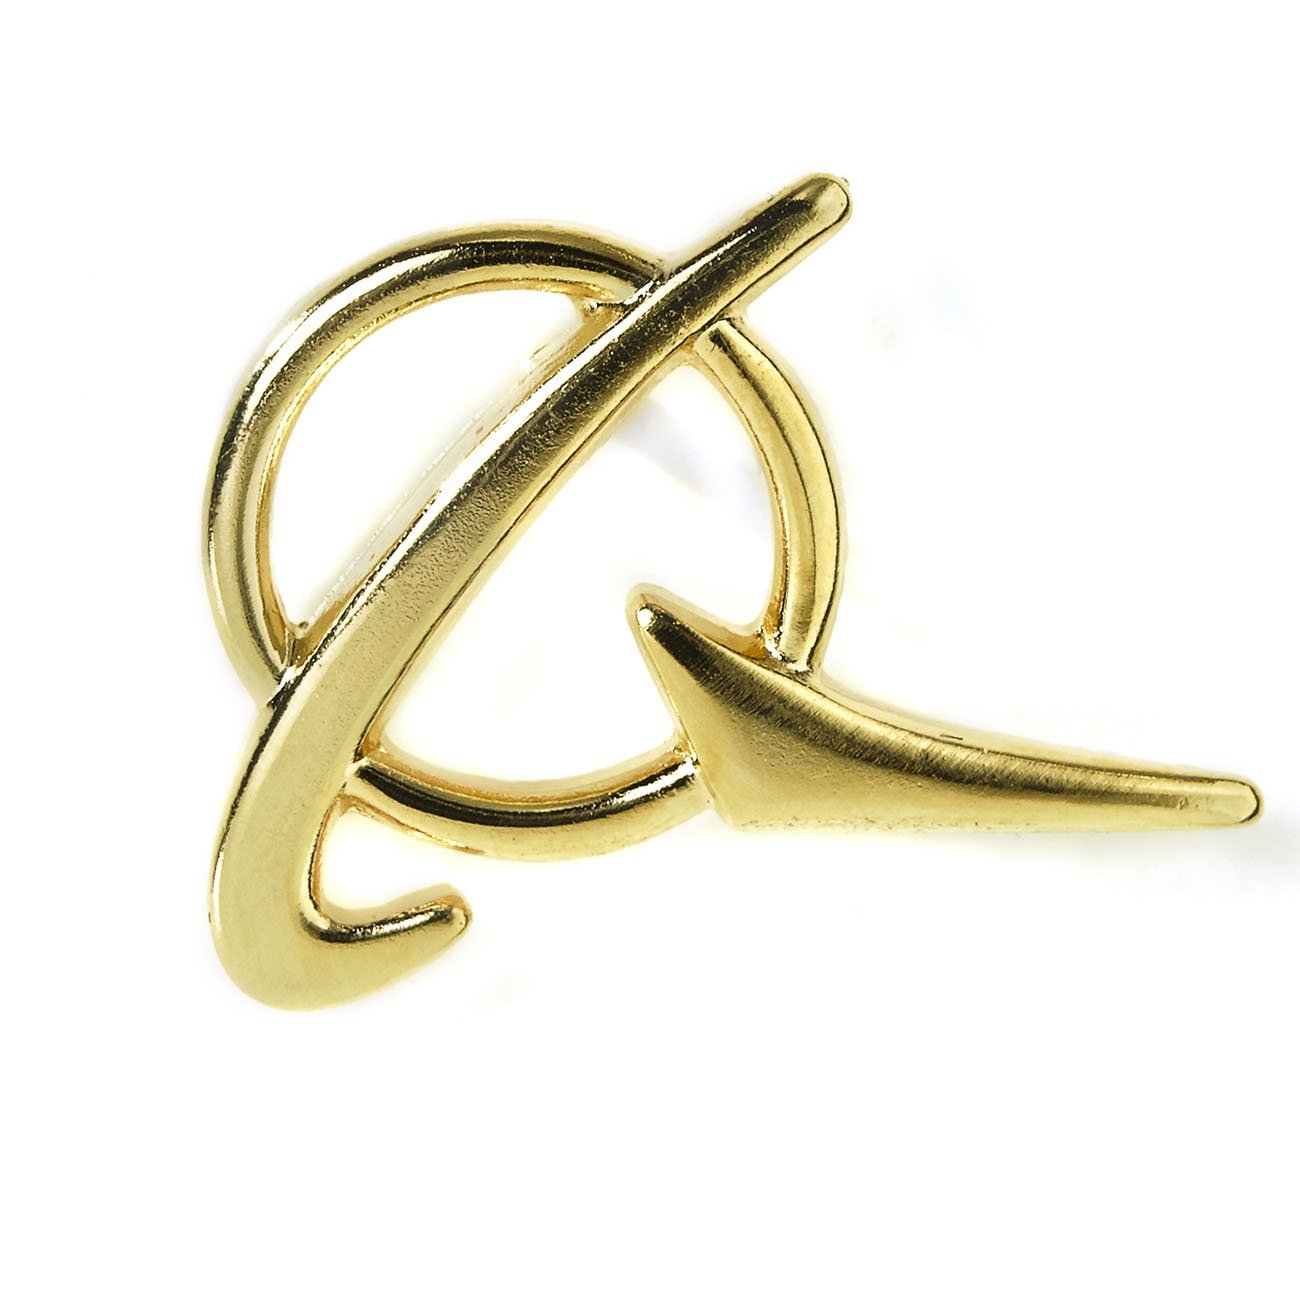 Boeing Symbol Lapel Pin